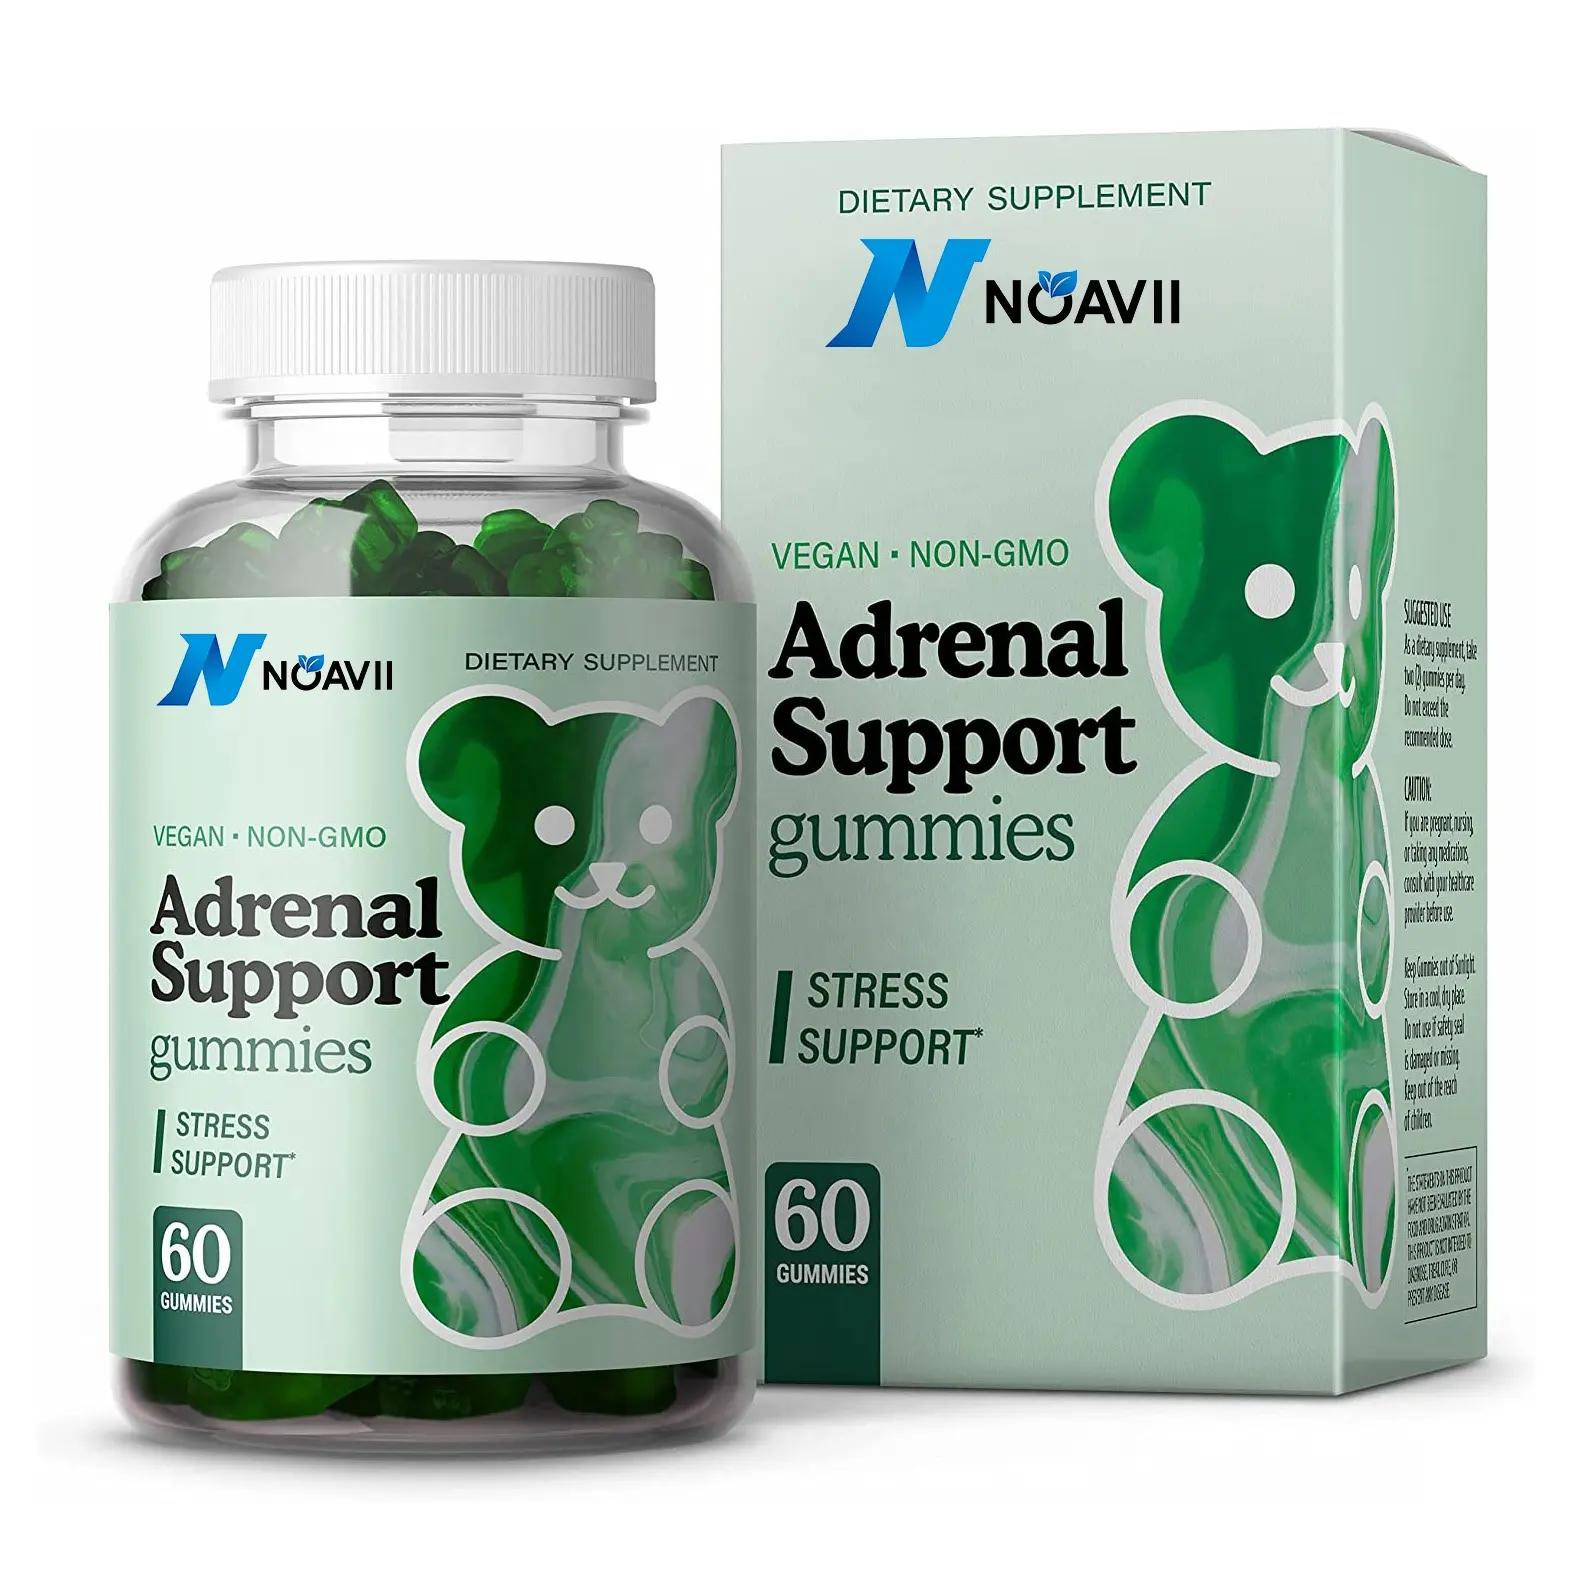 Etiqueta privada apoio adrenal gummias suplemento nutritivo com ashwagandha rodiola basil folha e raiz astragalus